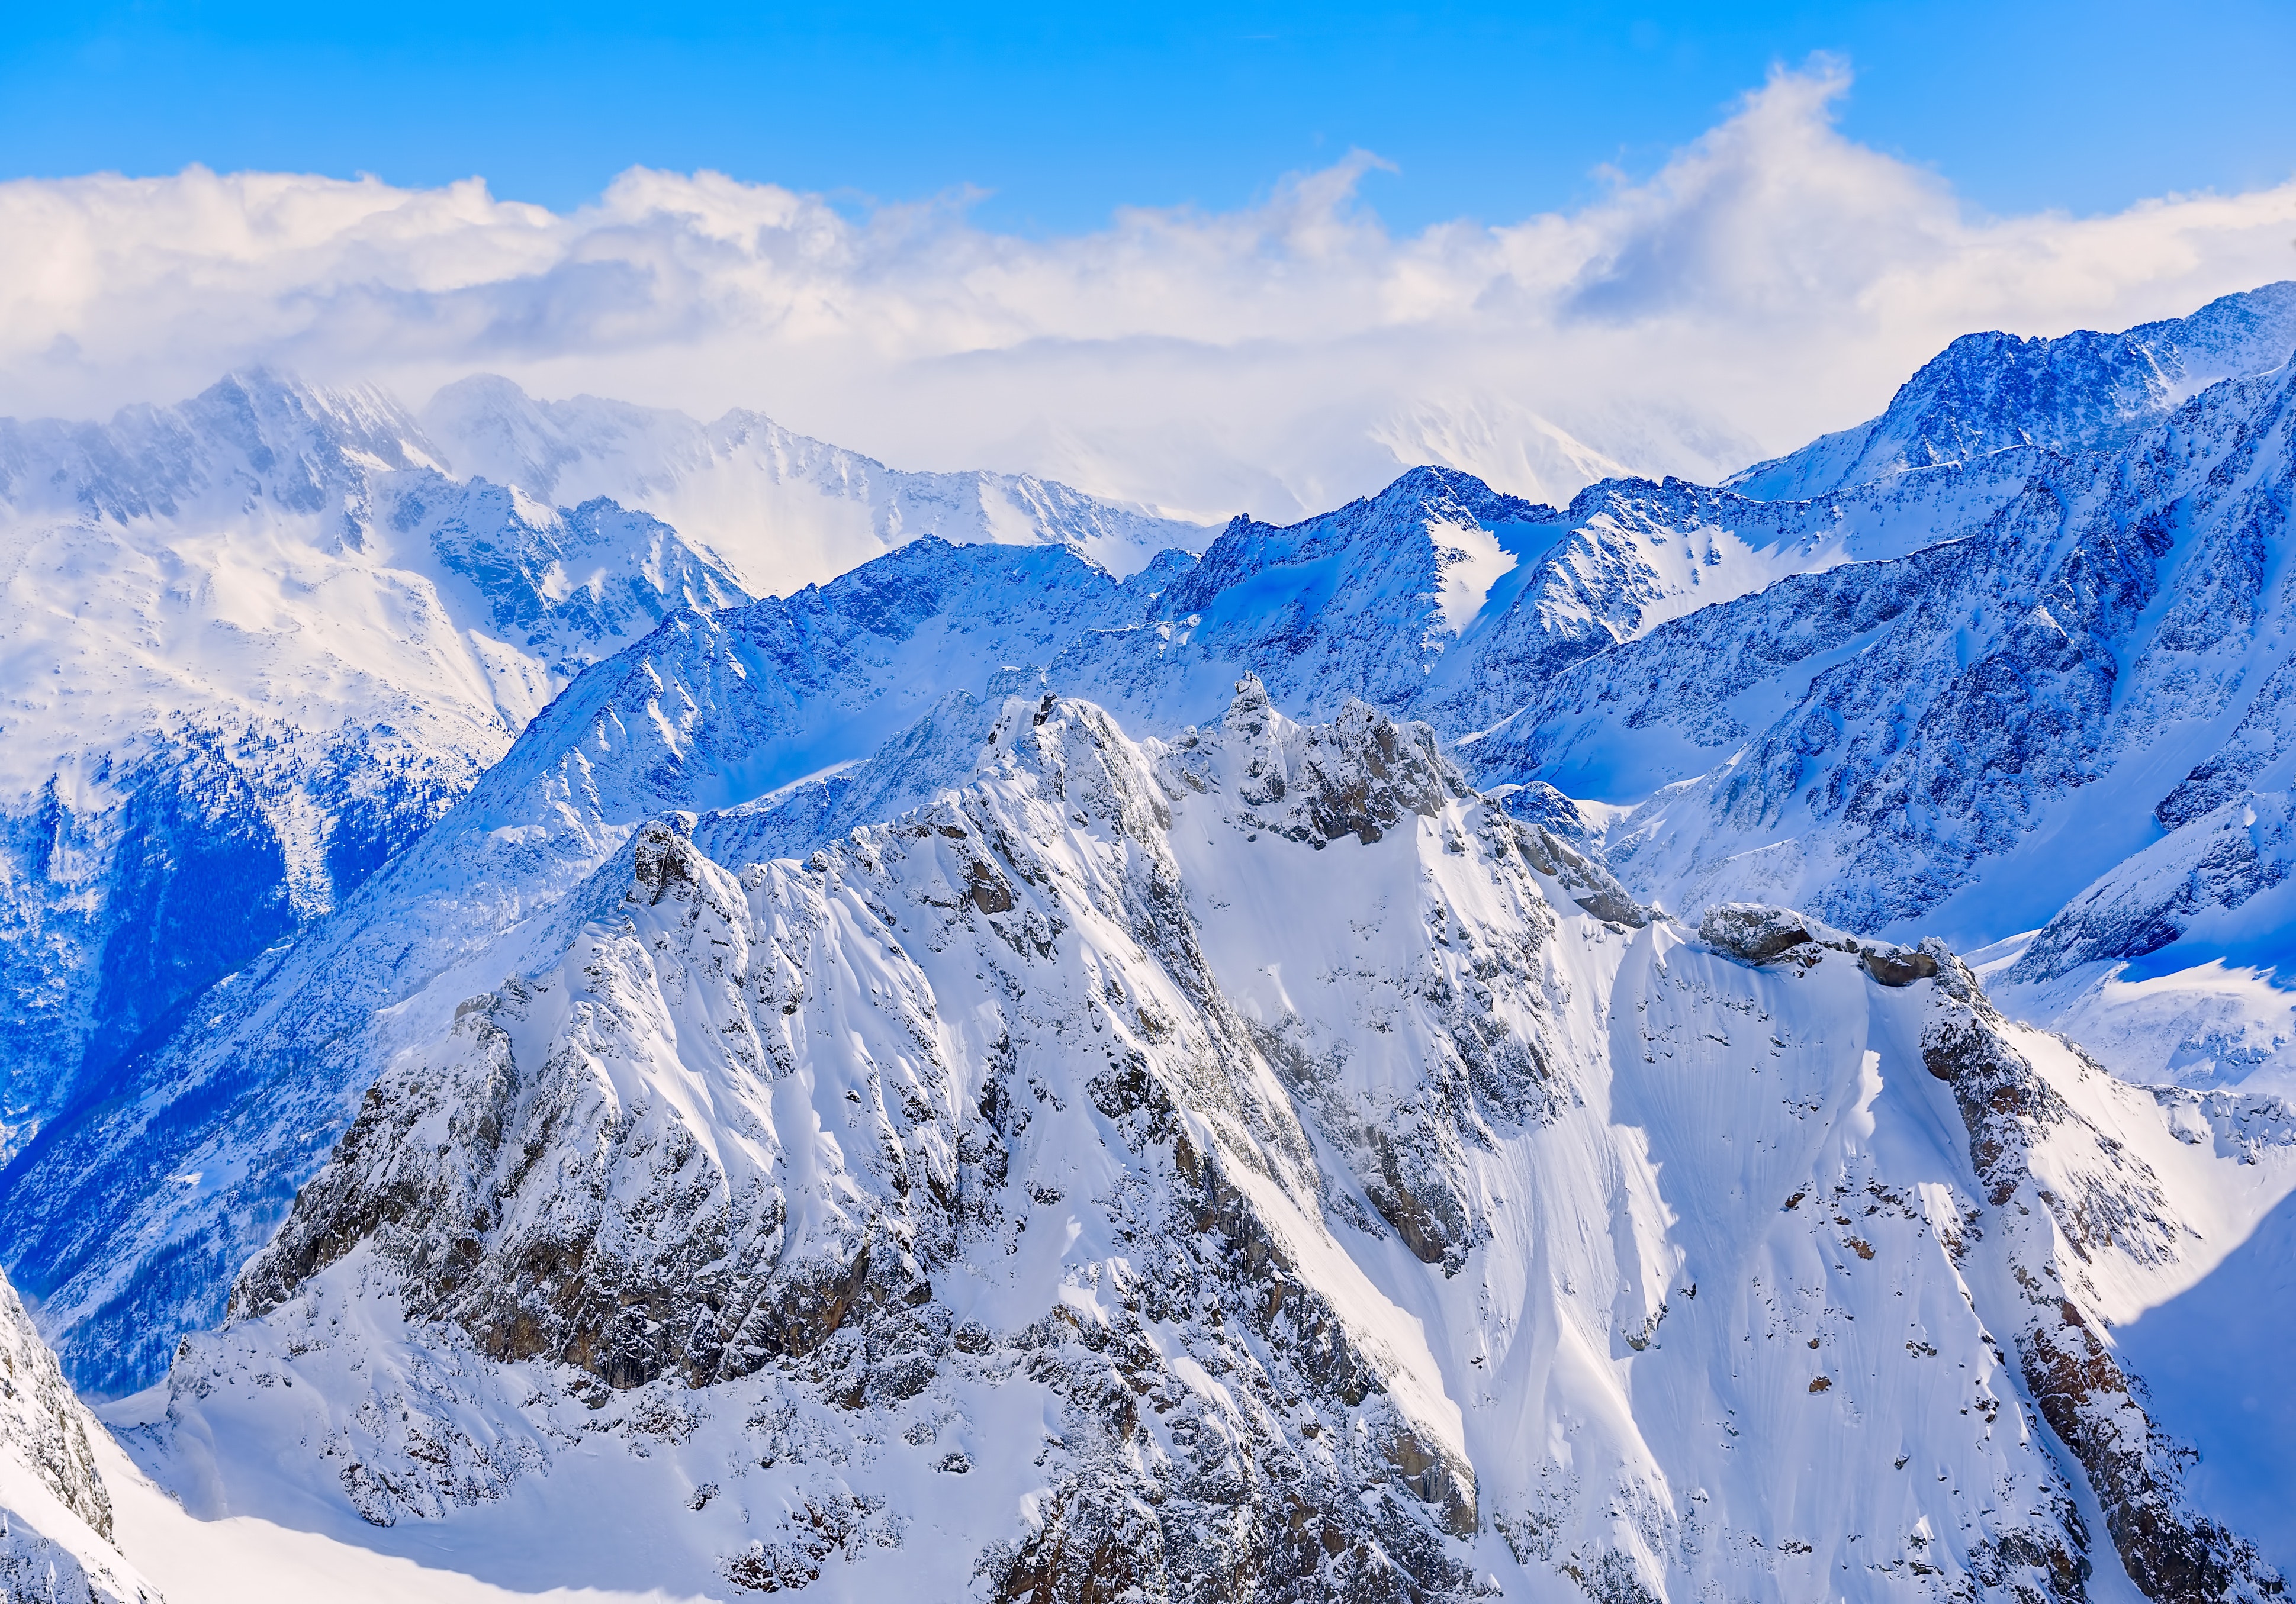 Mountain Ranges Covered in Snow, Adventure, Mountain peak, Nature, Peak, HQ Photo